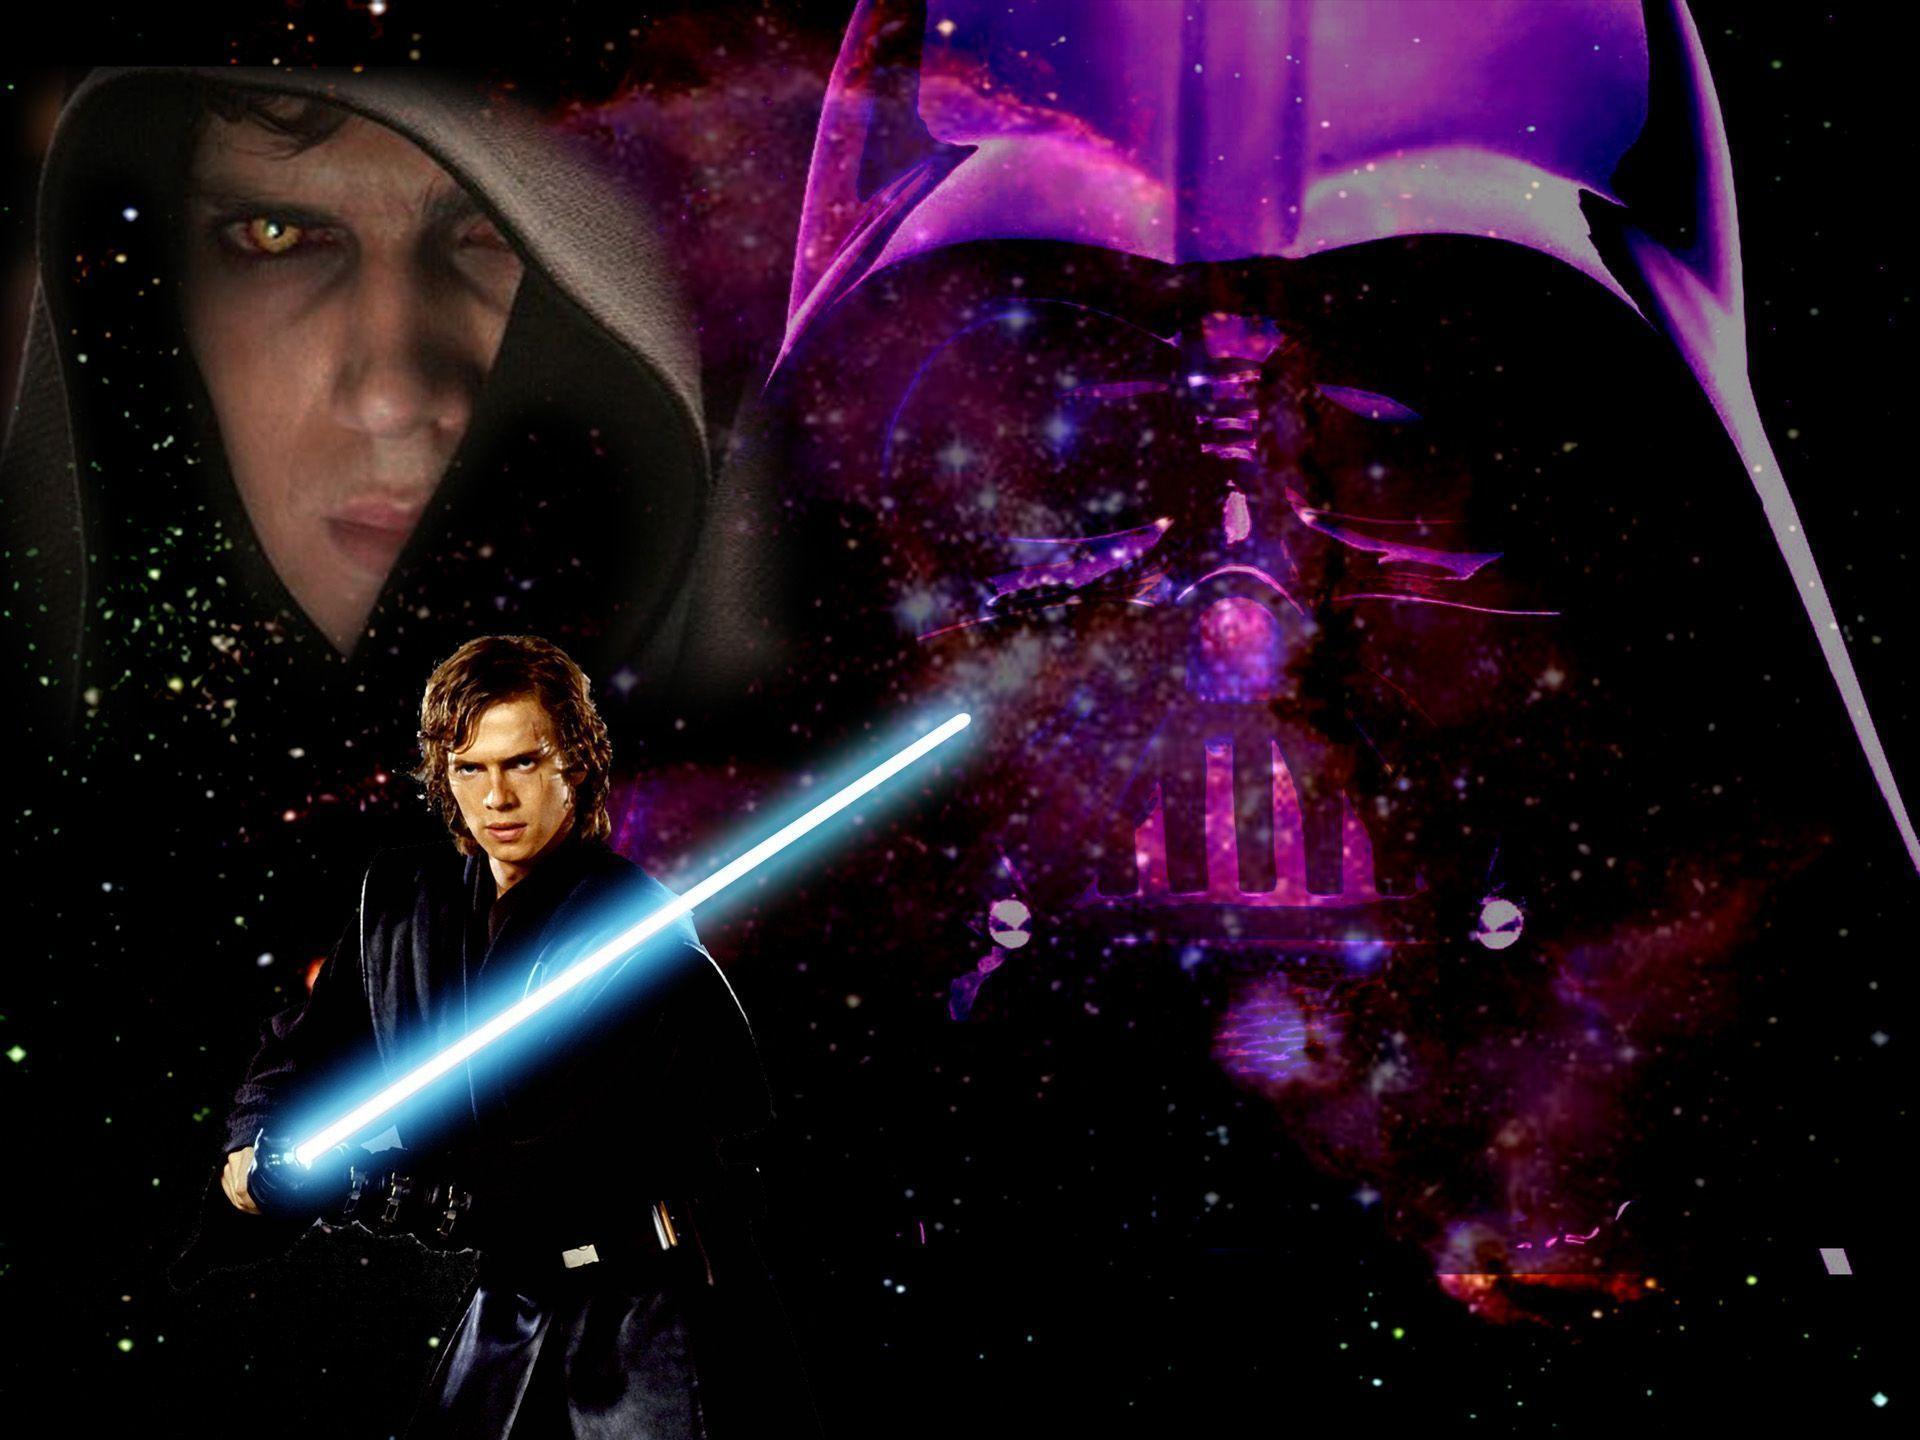 image For > Anakin Skywalker iPhone Wallpaper